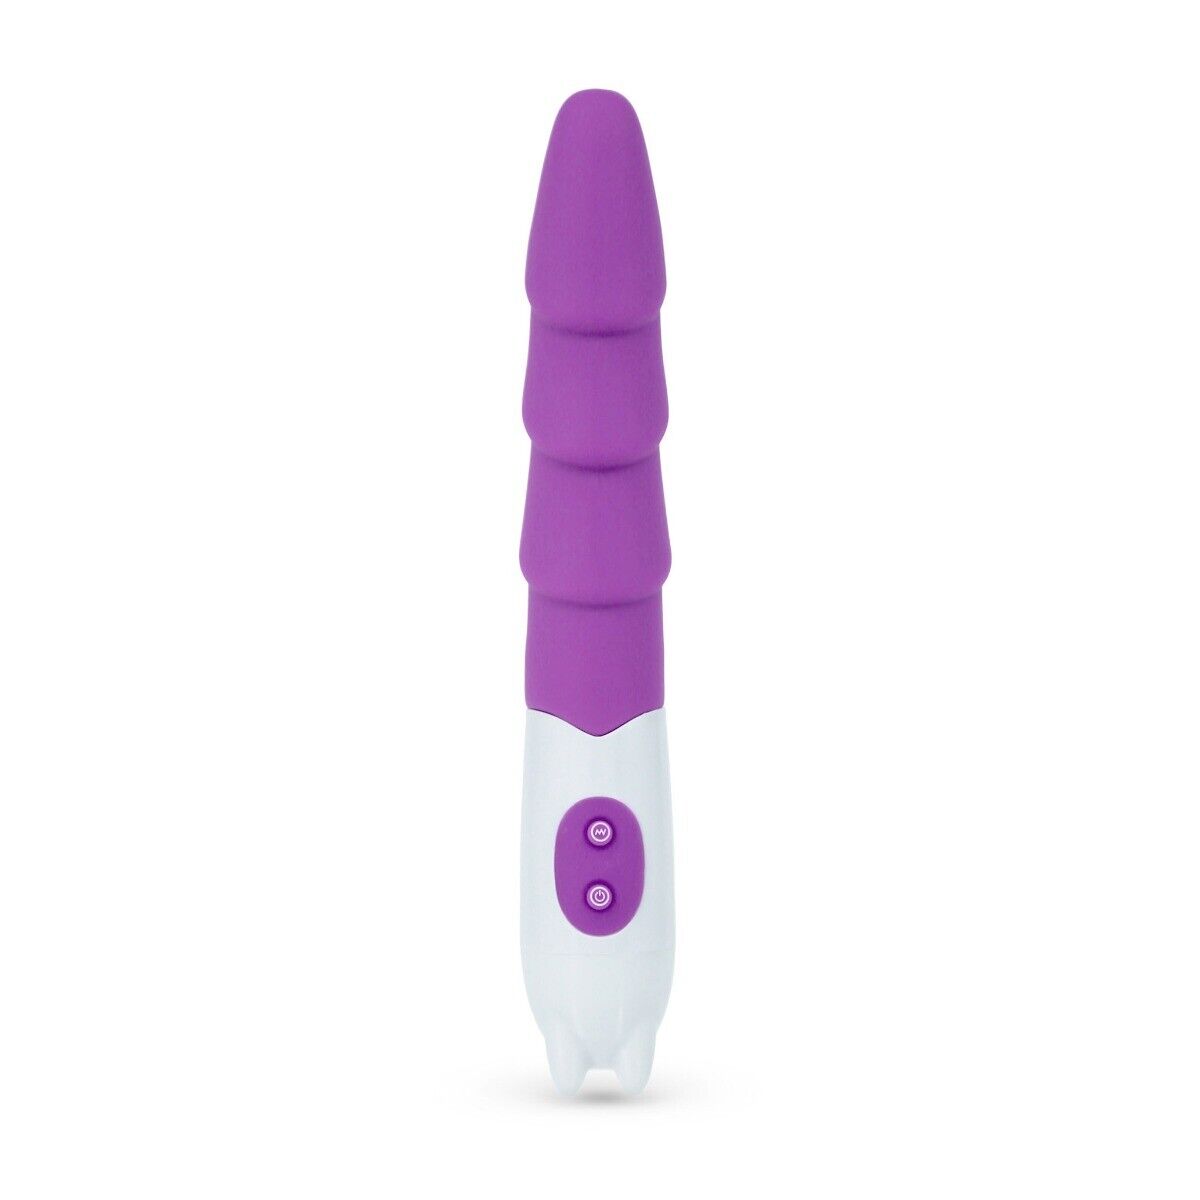 10 Multi-speed Silicone Clit Anal G-spot Vibrator Vibe Dildo Sex-toys for Women